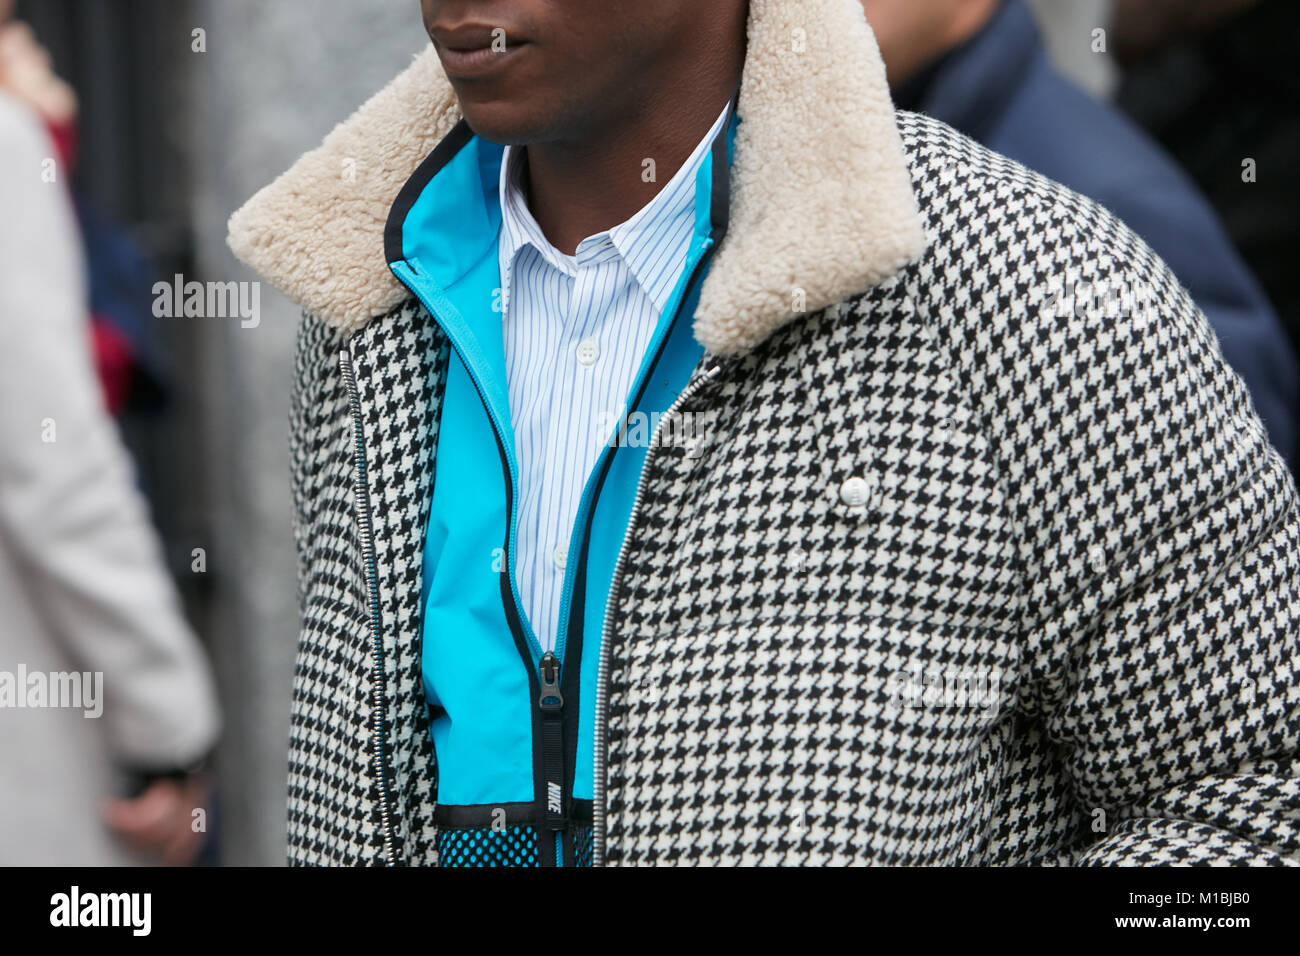 MILAN - JANUARY 15: Man with black and white houndstooth jacket and blue Nike sweatshirt before Giorgio Armani fashion show, Milan Fashion Week street Stock Photo